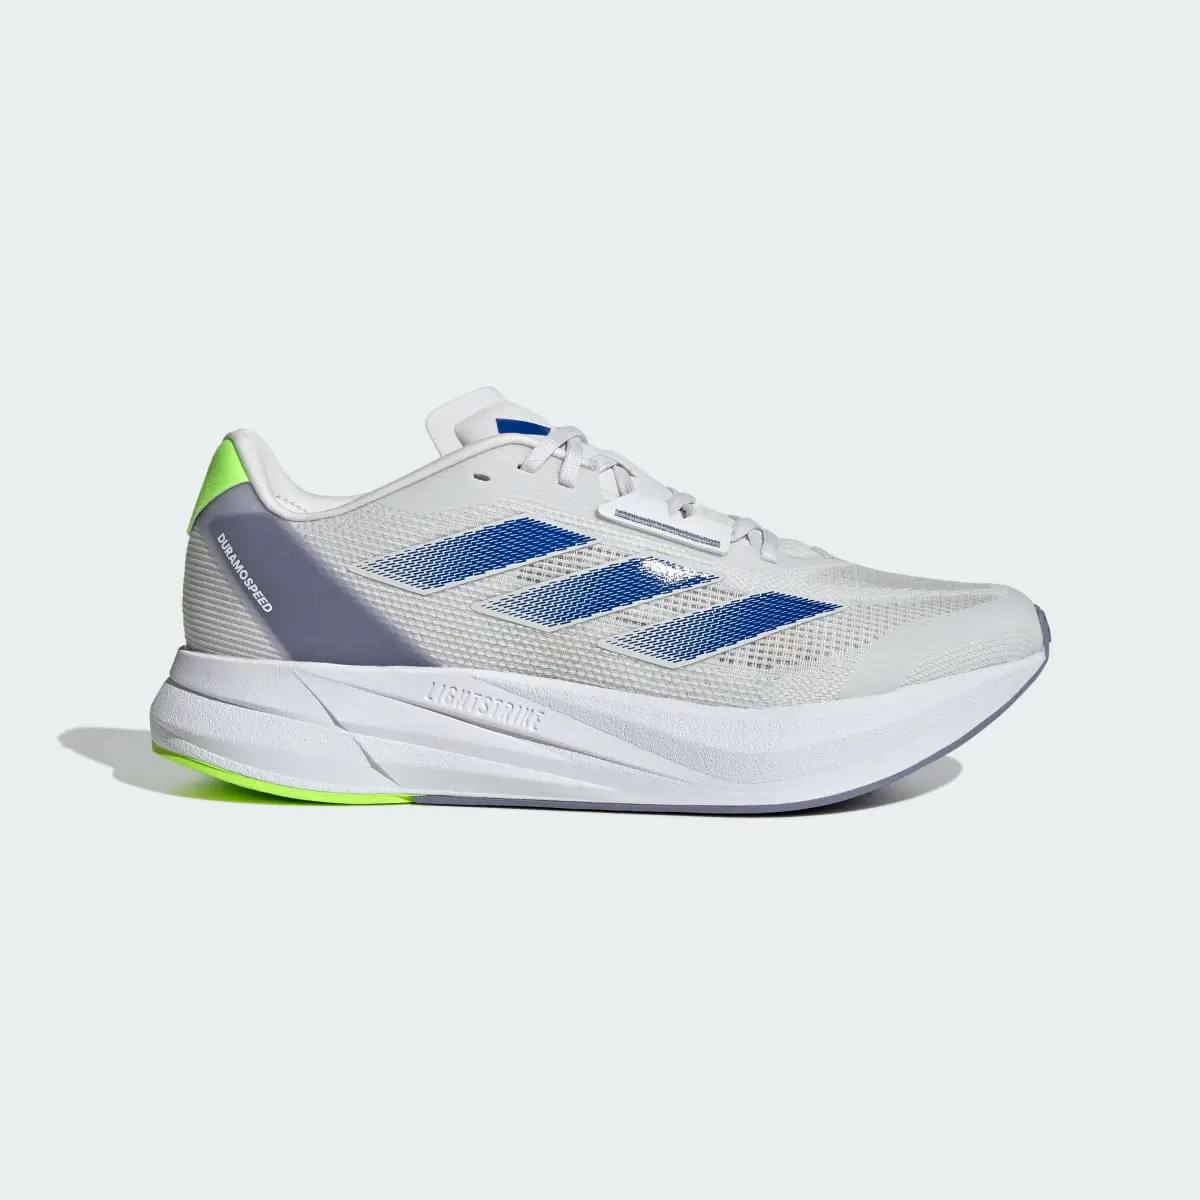 Adidas Duramo Speed Shoes. 2